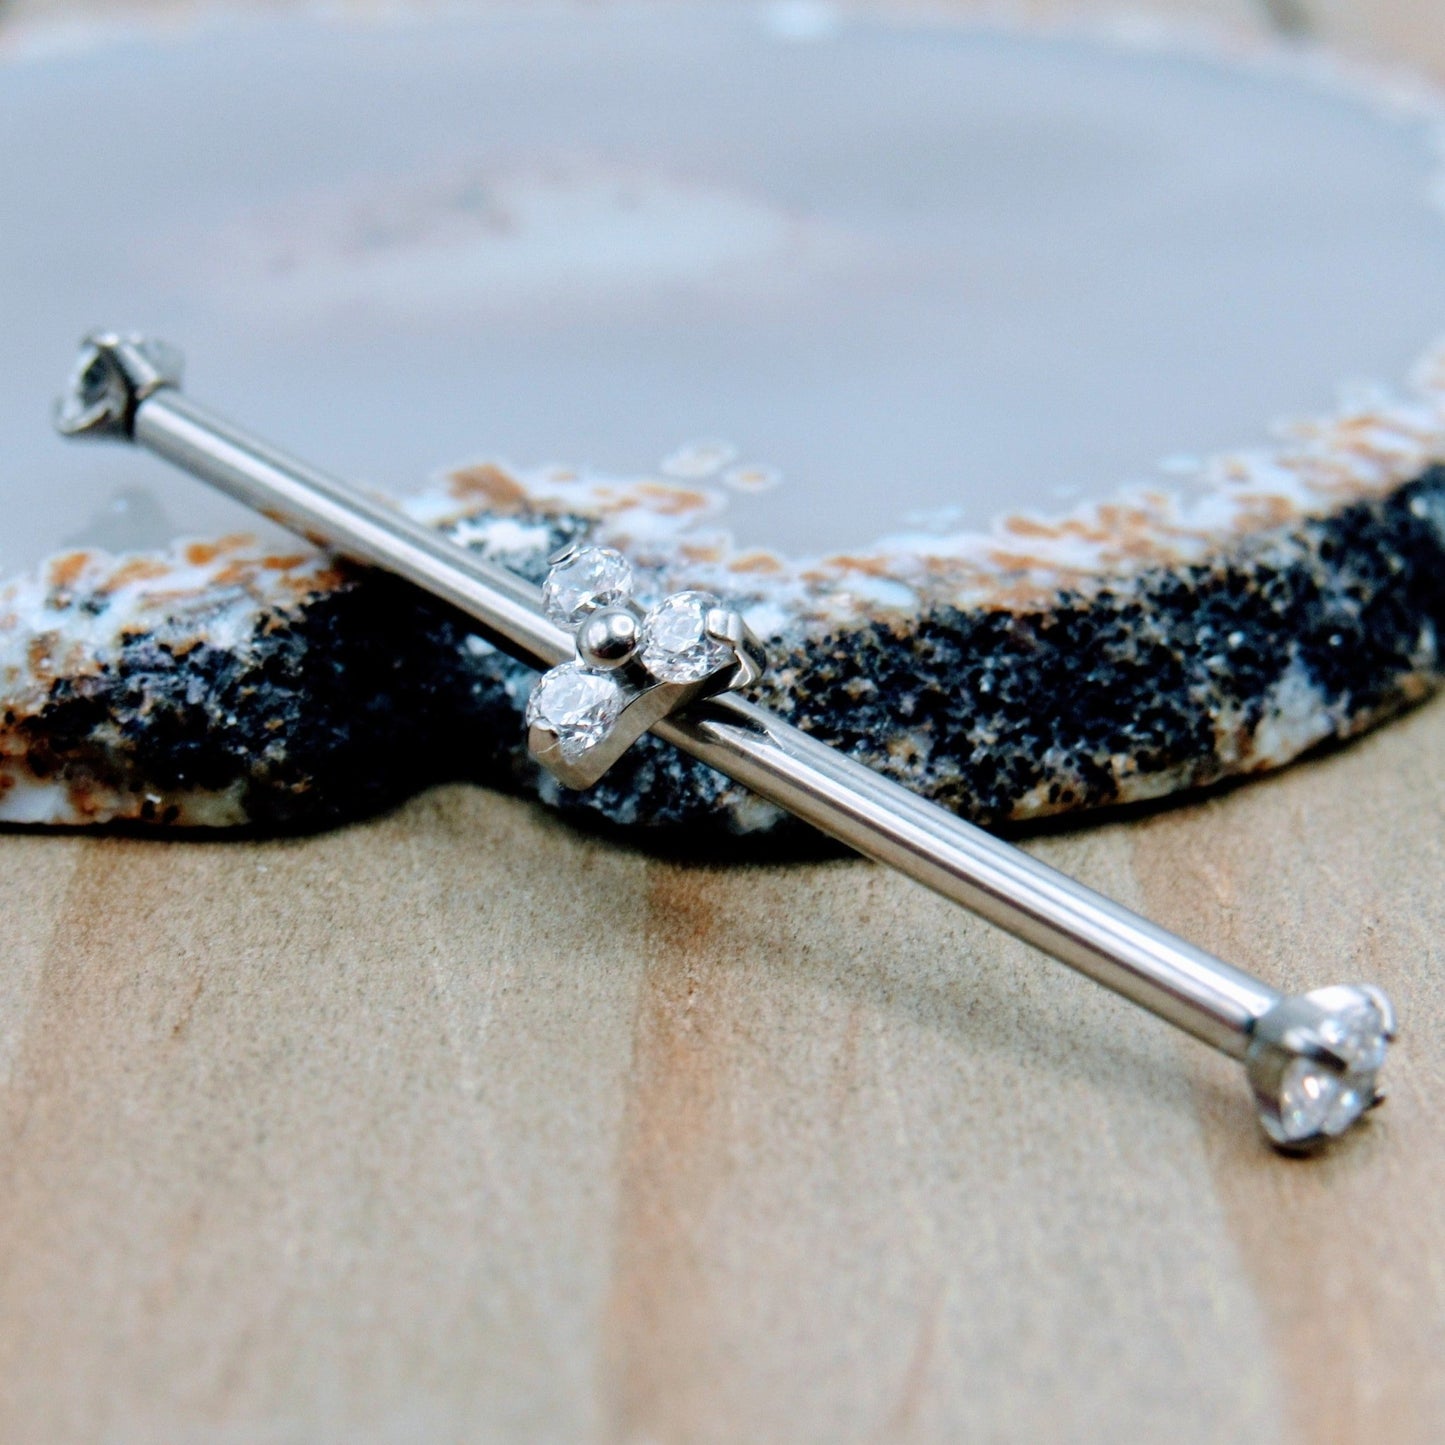 14g Titanium industrial piercing barbell internally threaded 1 1/4" or 1 1/2" length 3mm prong clear gemstones gem trio - Siren Body Jewelry